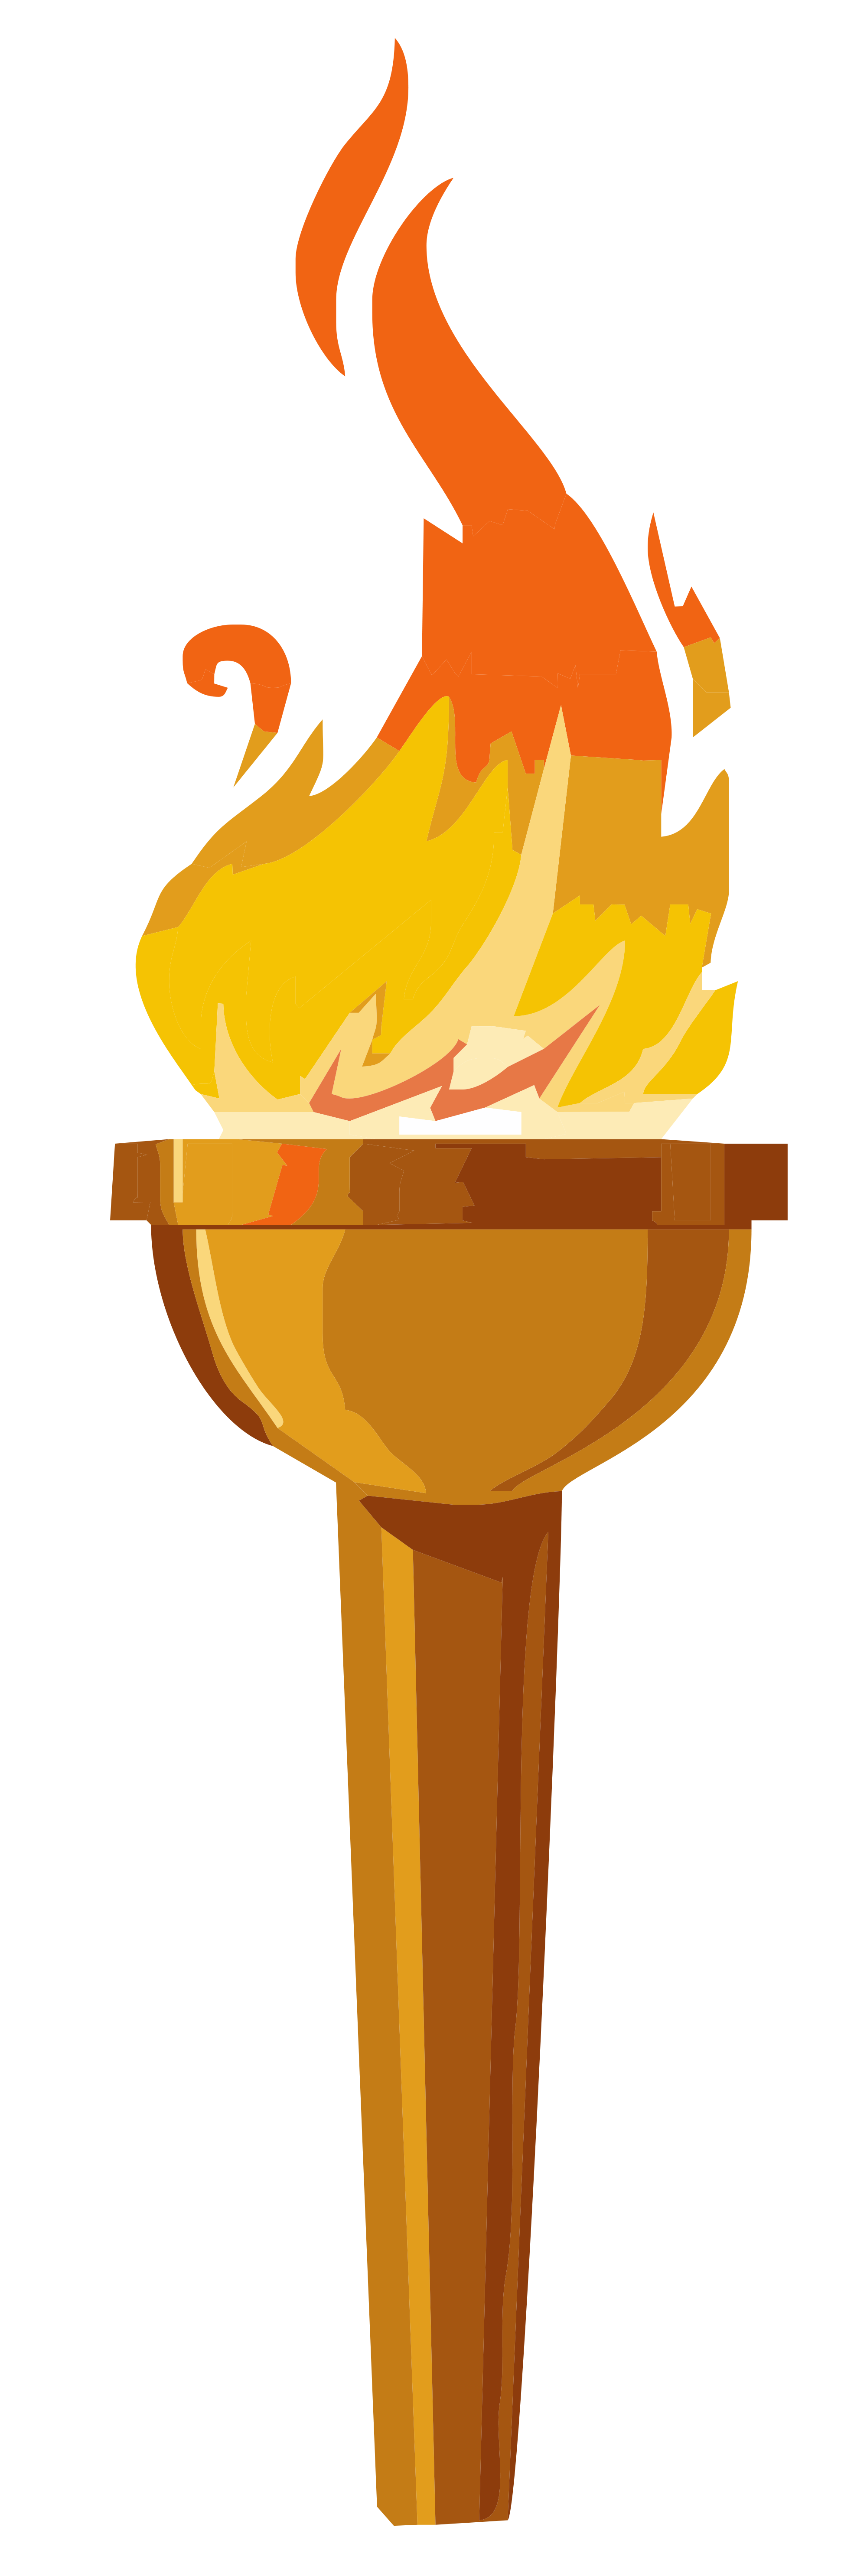 Flames clipart torch fire, Flames torch fire Transparent